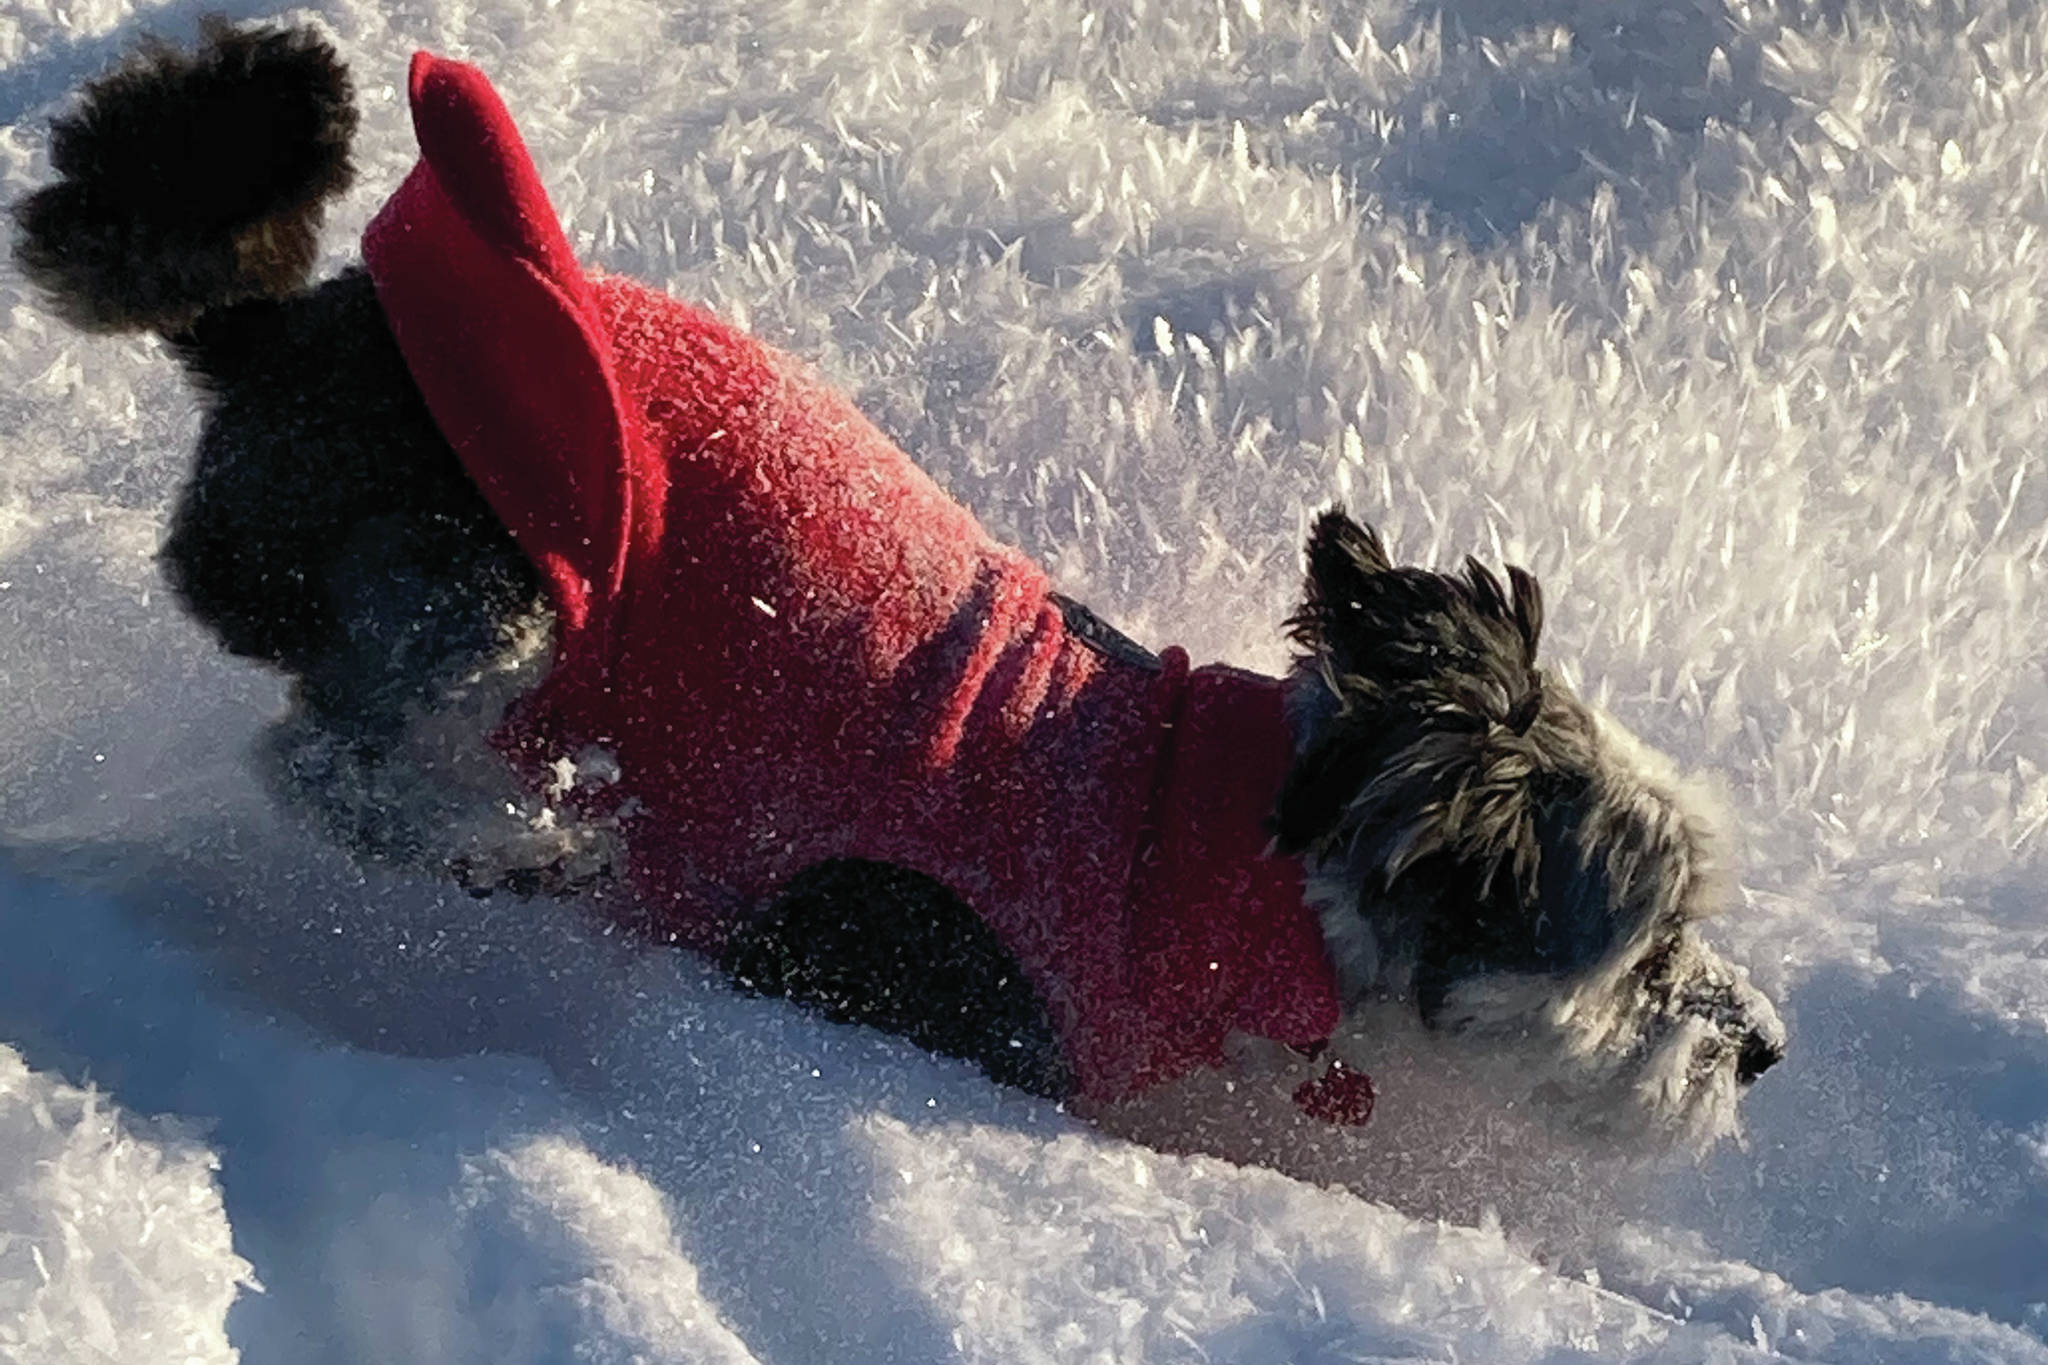 Fletcher runs through the snow on Saturday, Jan. 2, 2021, on Diamond Ridge near Homer, Alaska. (Photo by Michael Armstrong/Homer News)